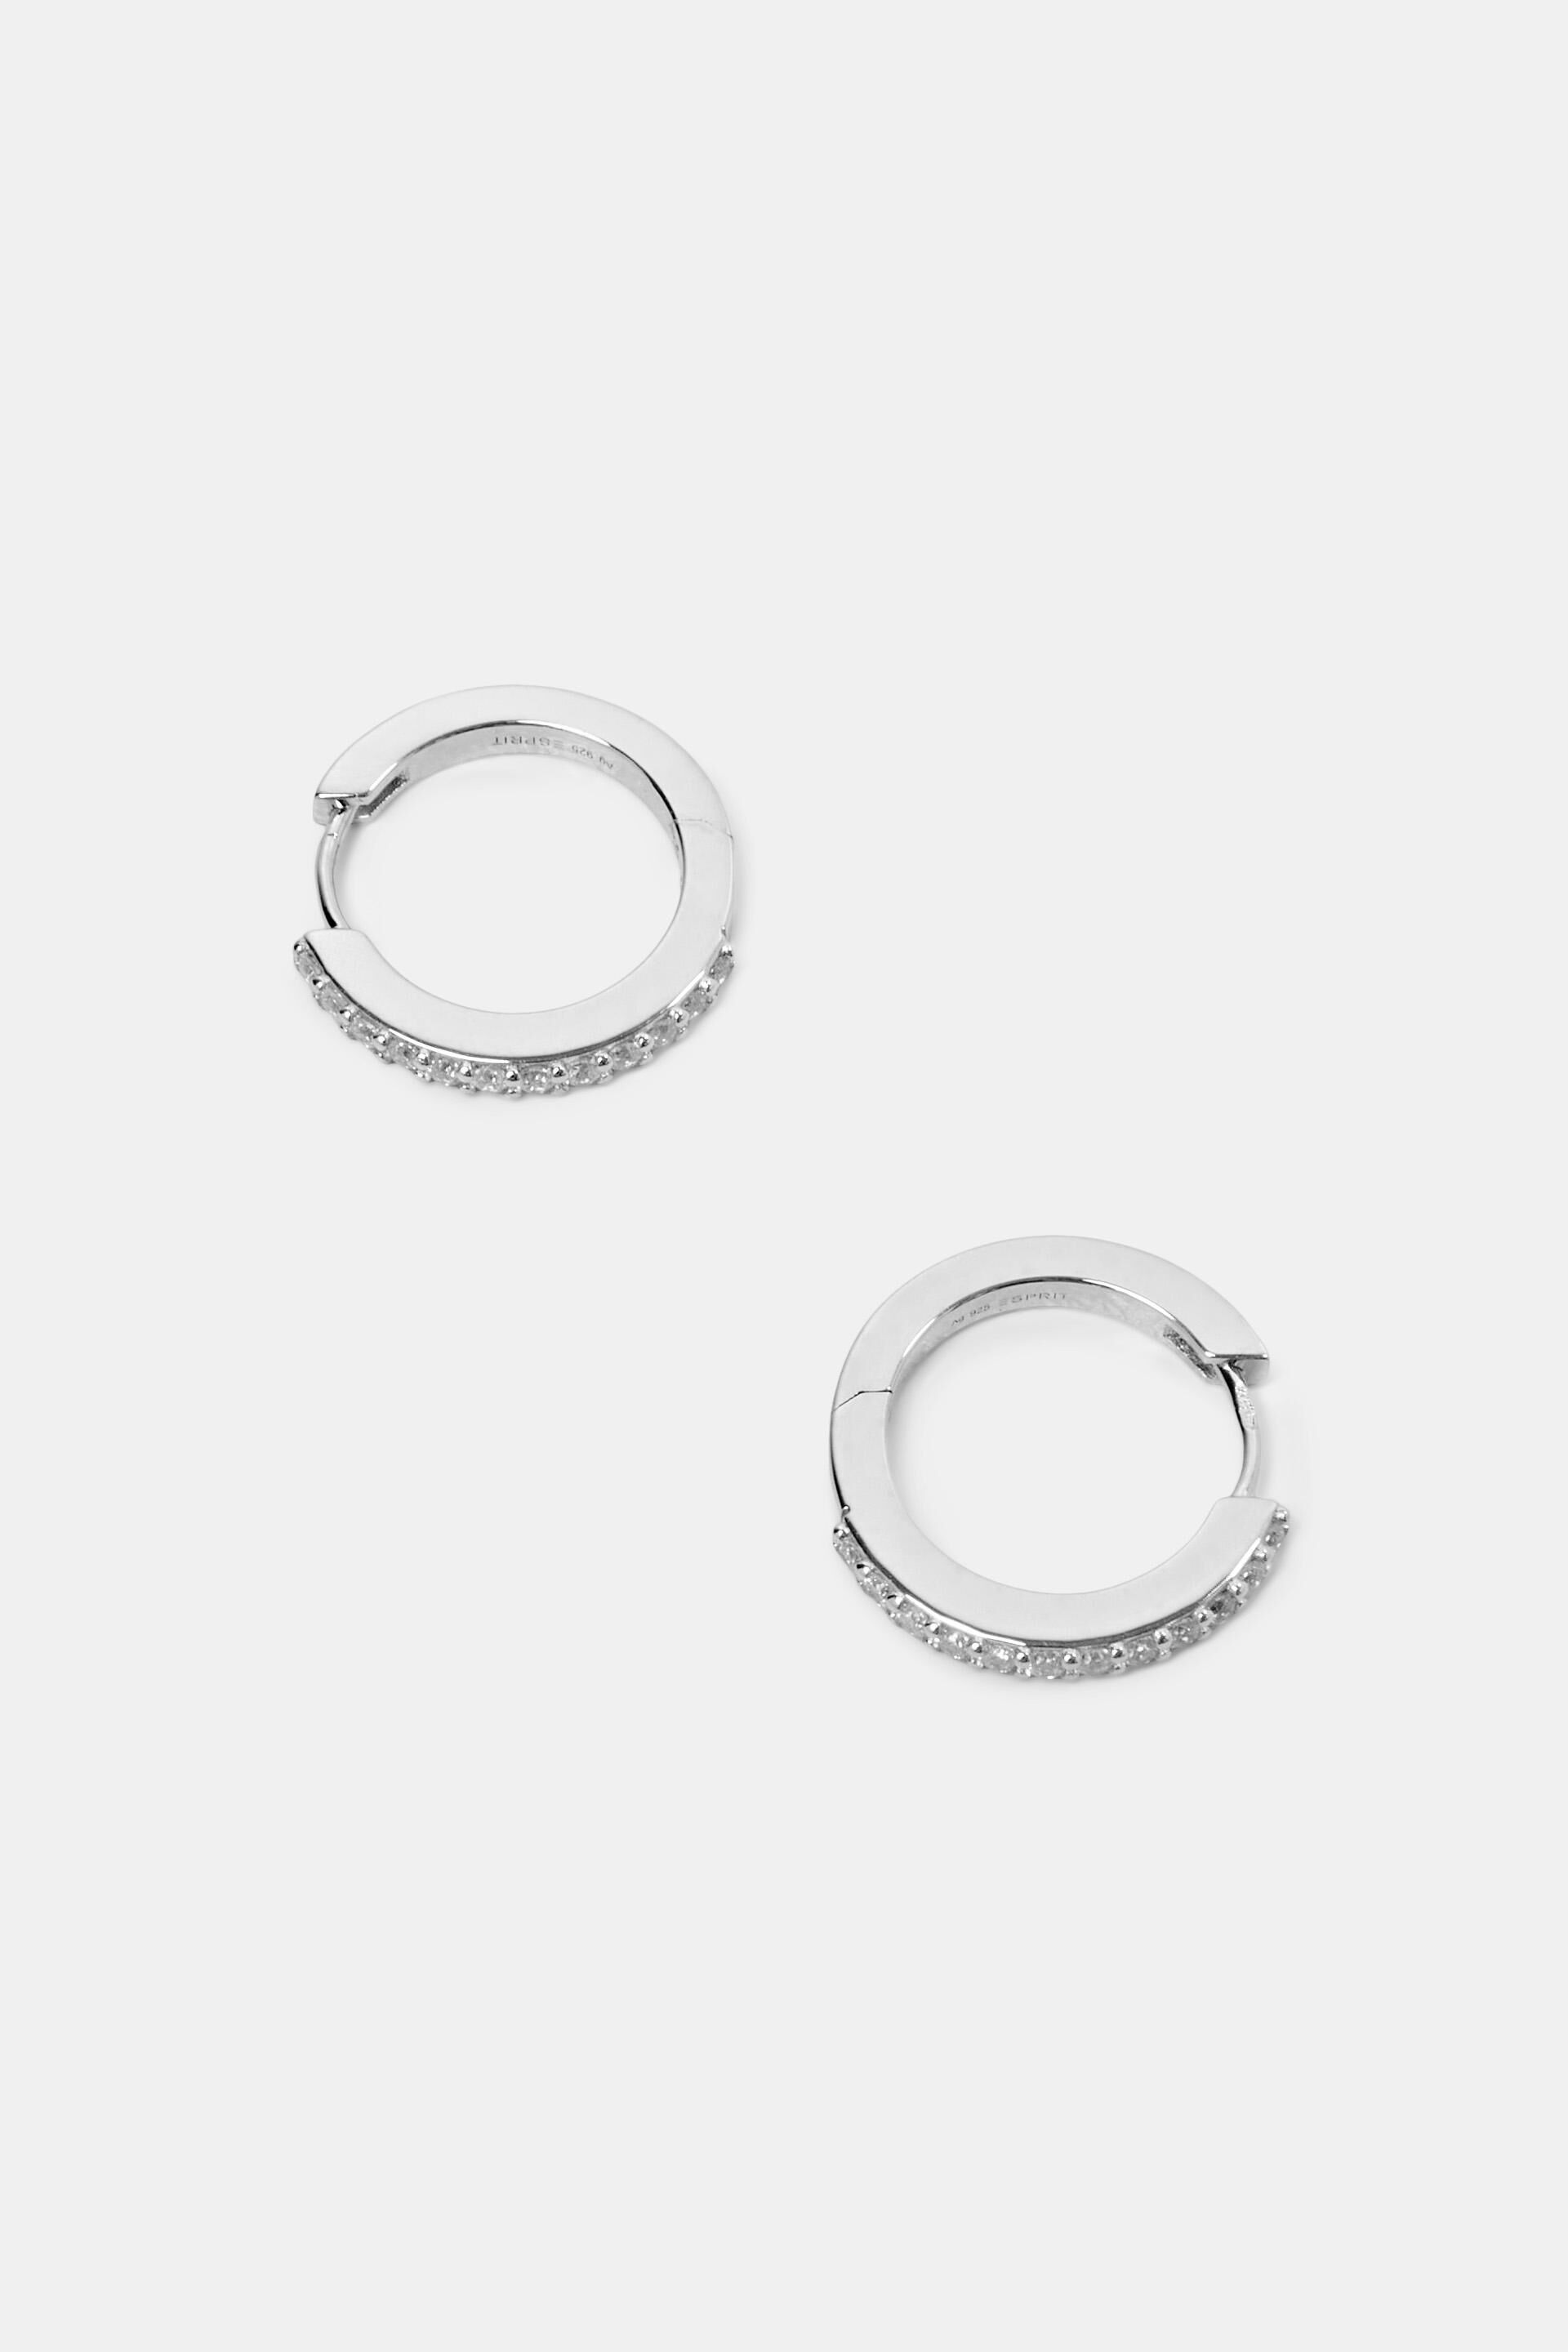 Esprit Online Store Earrings